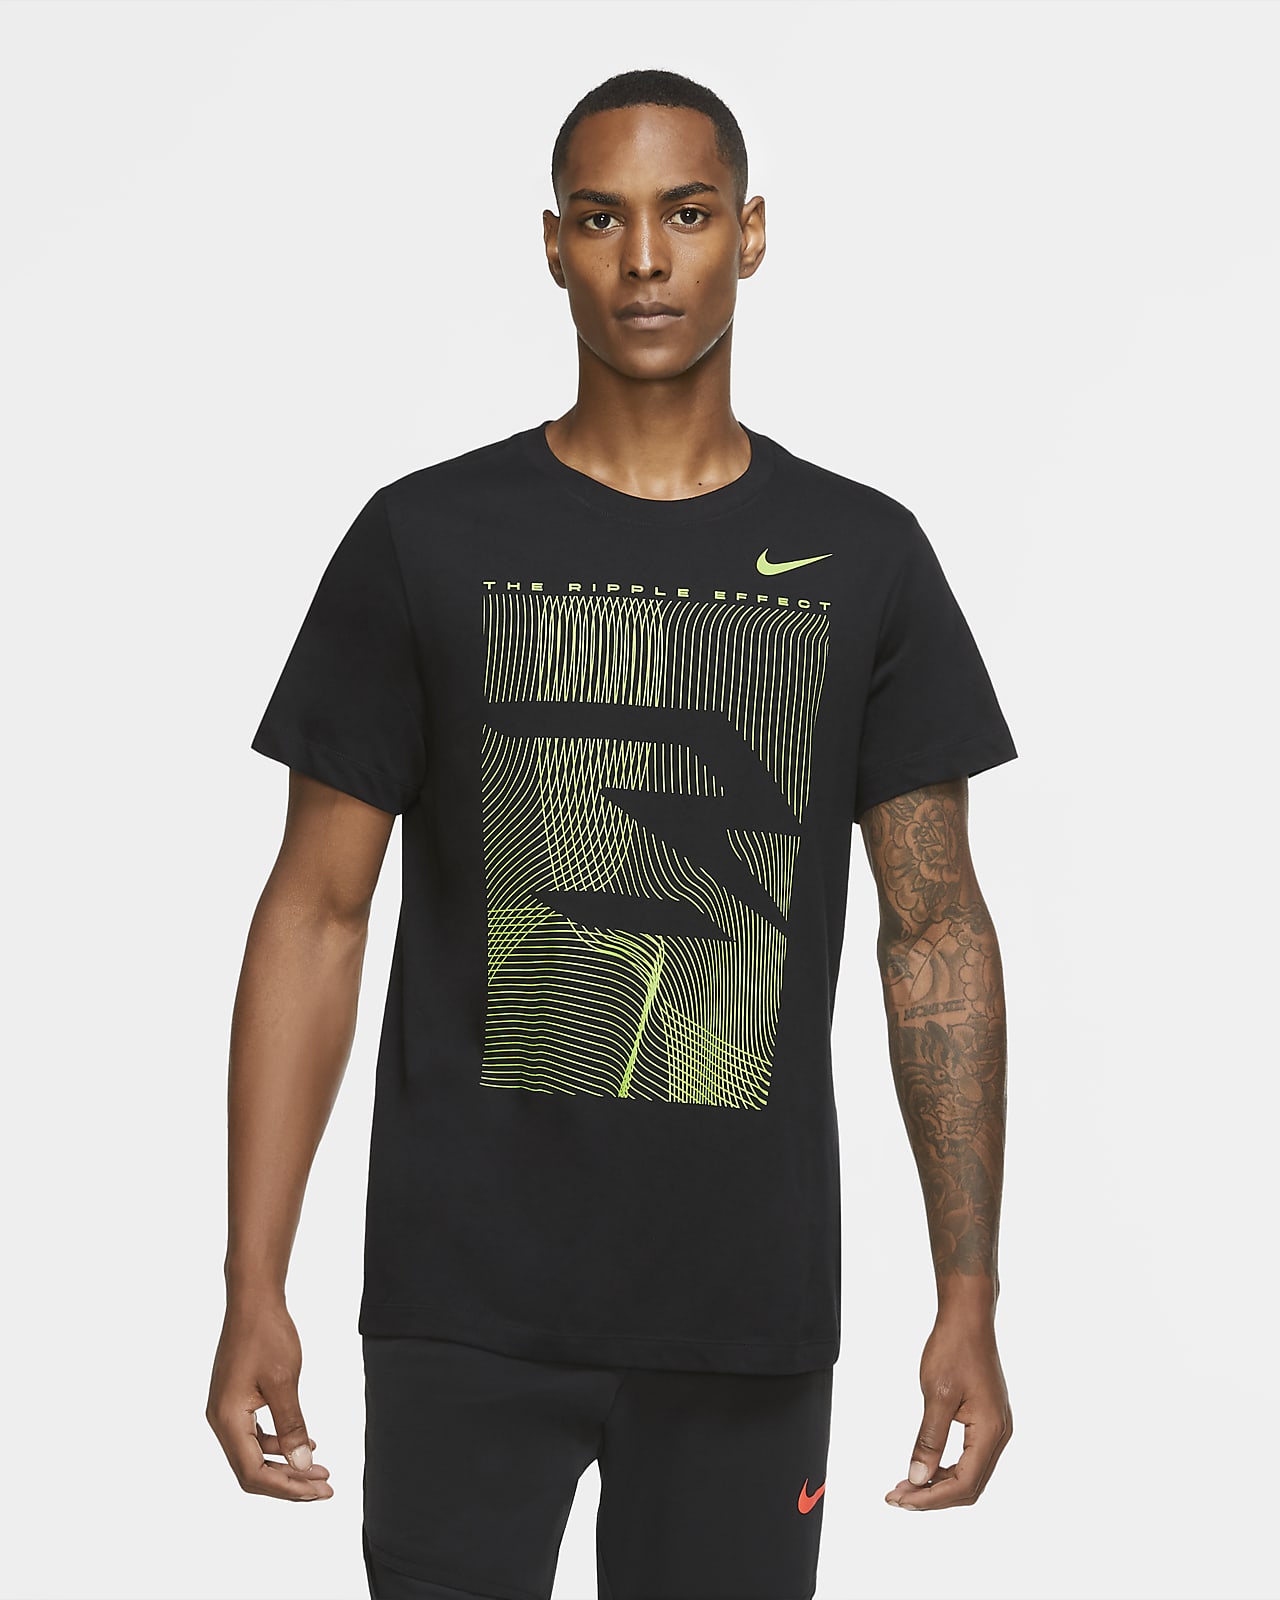 Nike Dri-FIT Russell Wilson Men's T-Shirt